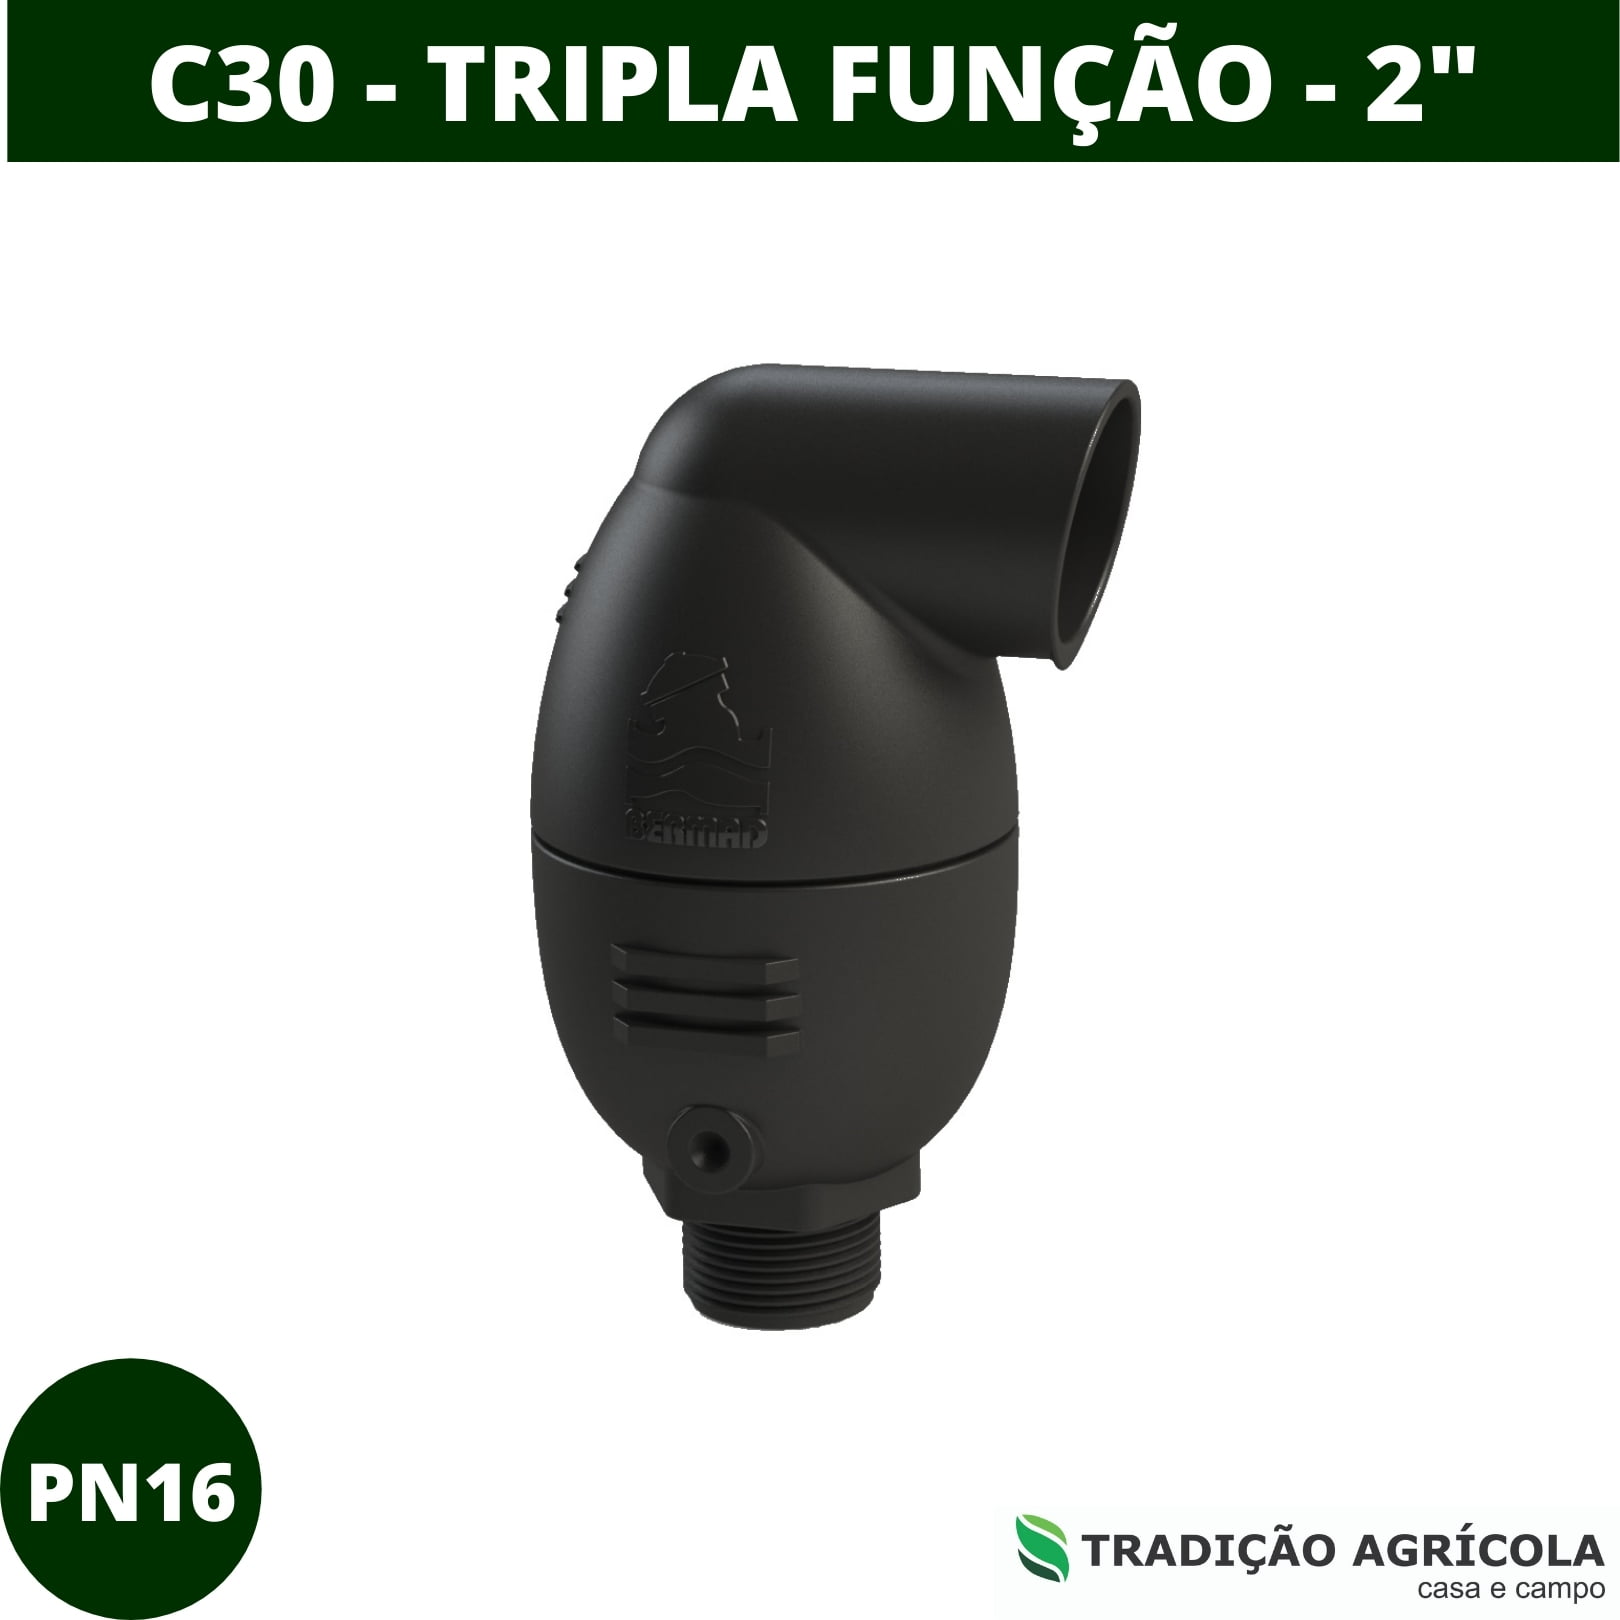 VÁLVULA DE AR BERMAD COMBINADA PN16 C30 2" - TRIPLA FUNÇÃO 